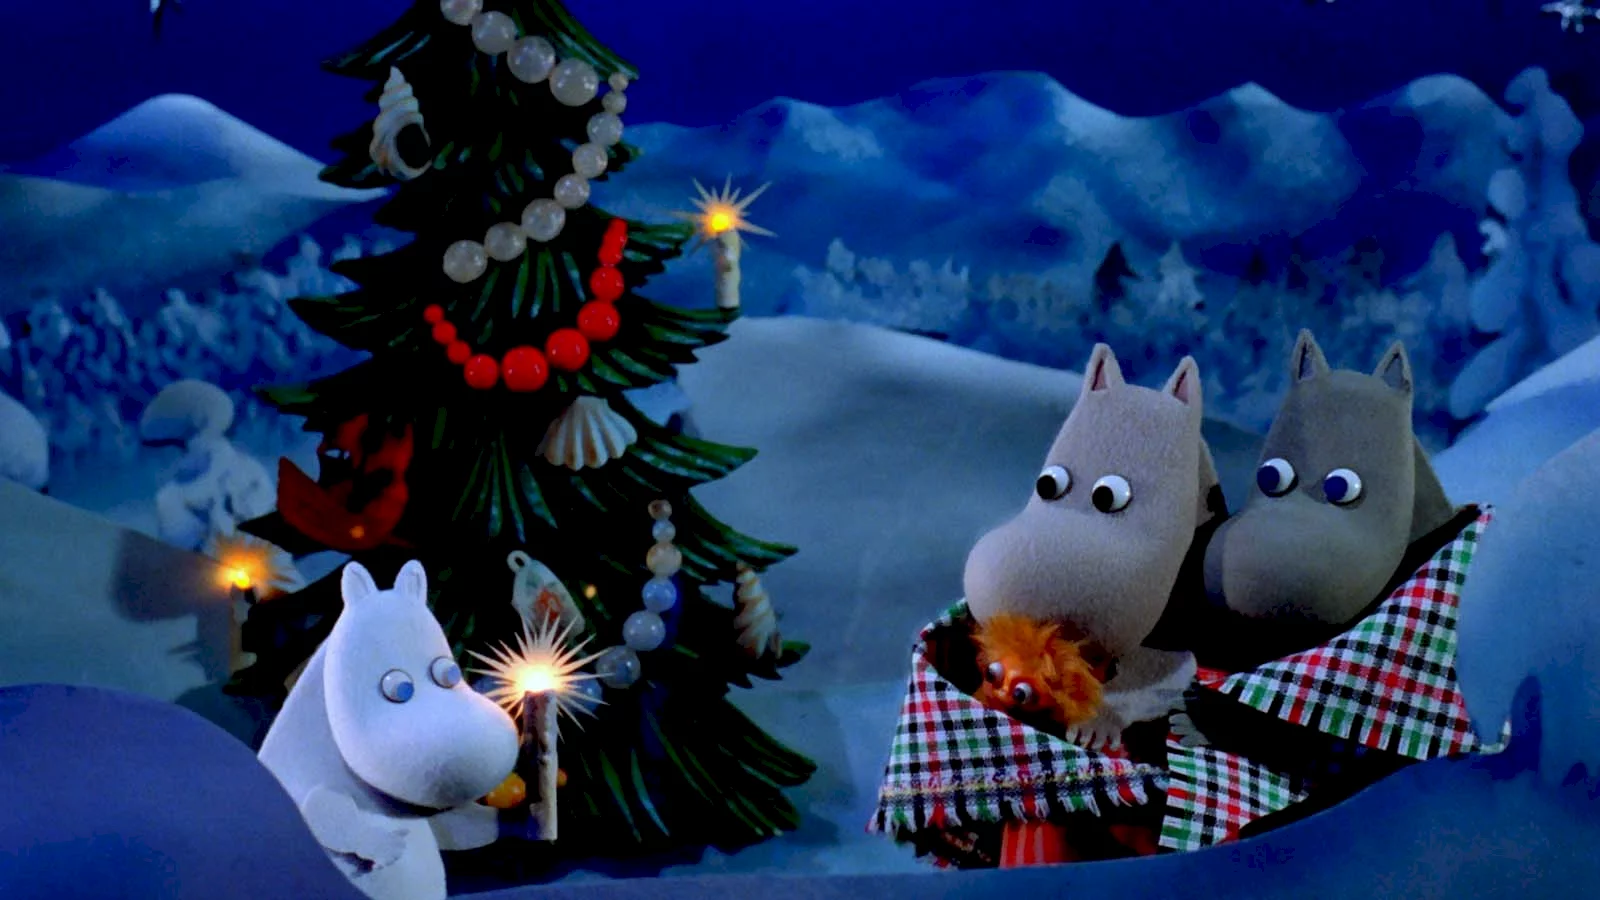 Photo du film : Les Moomins attendent Noël